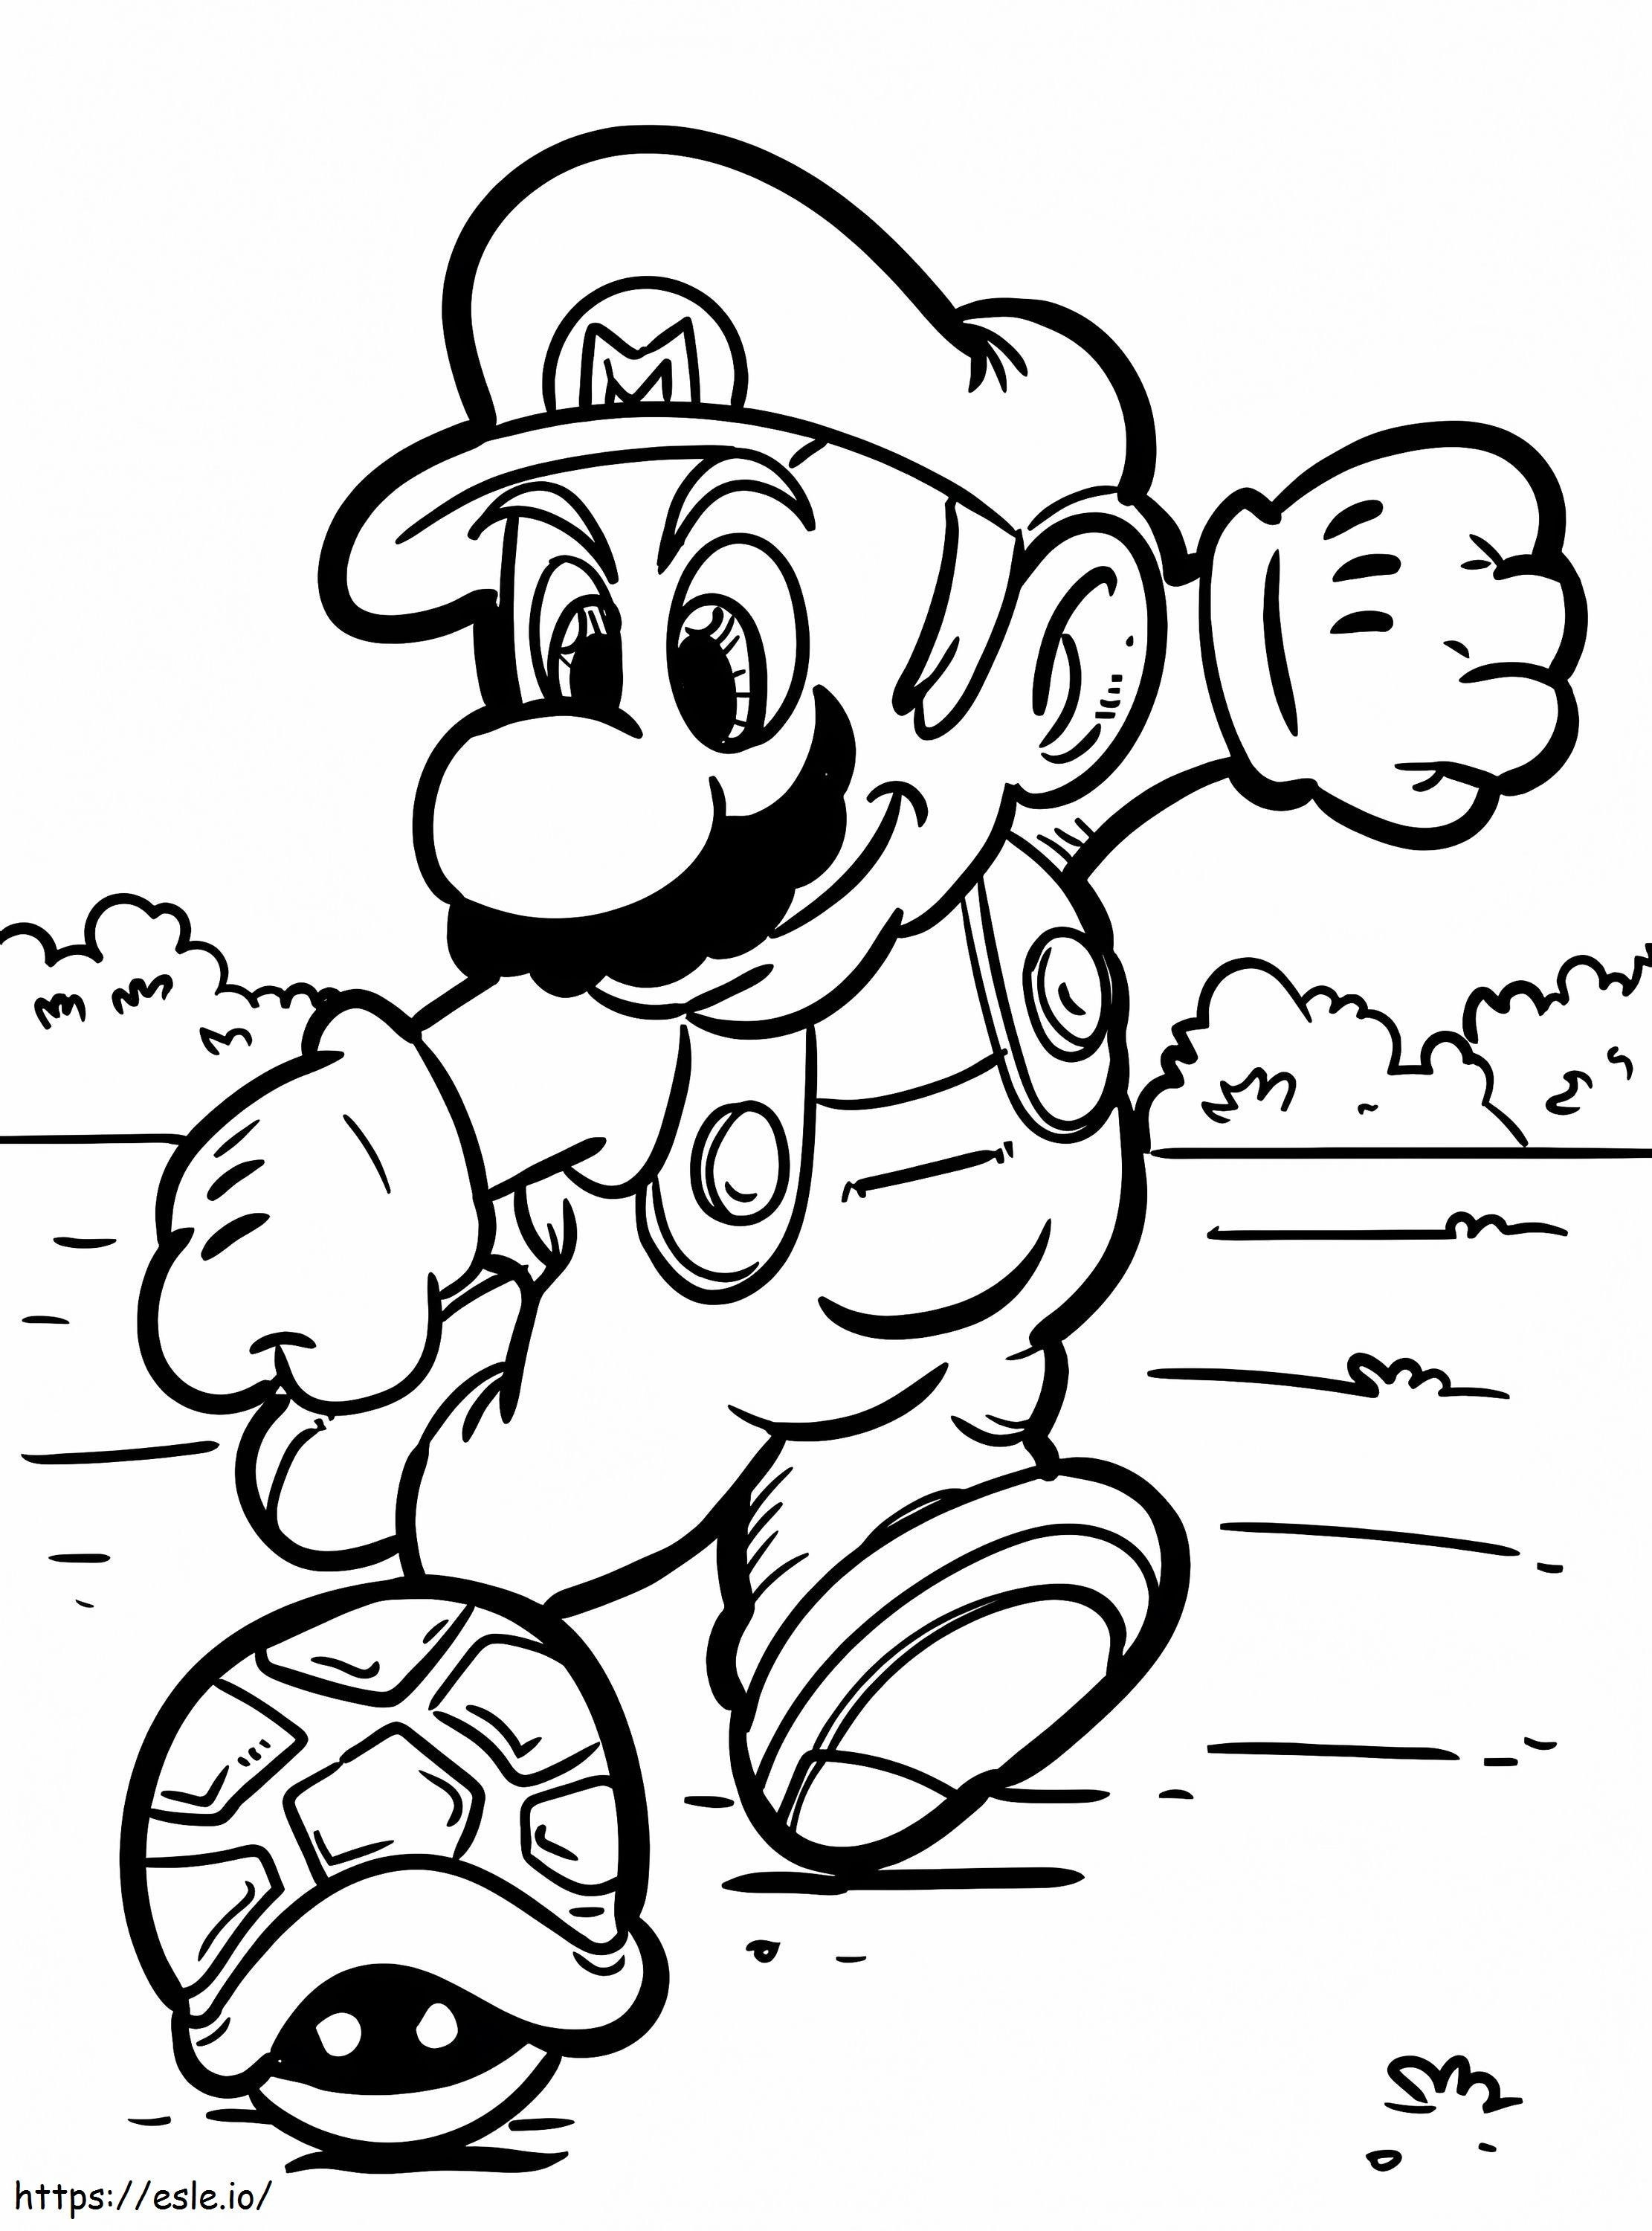 Mario Kicks kleurplaat kleurplaat